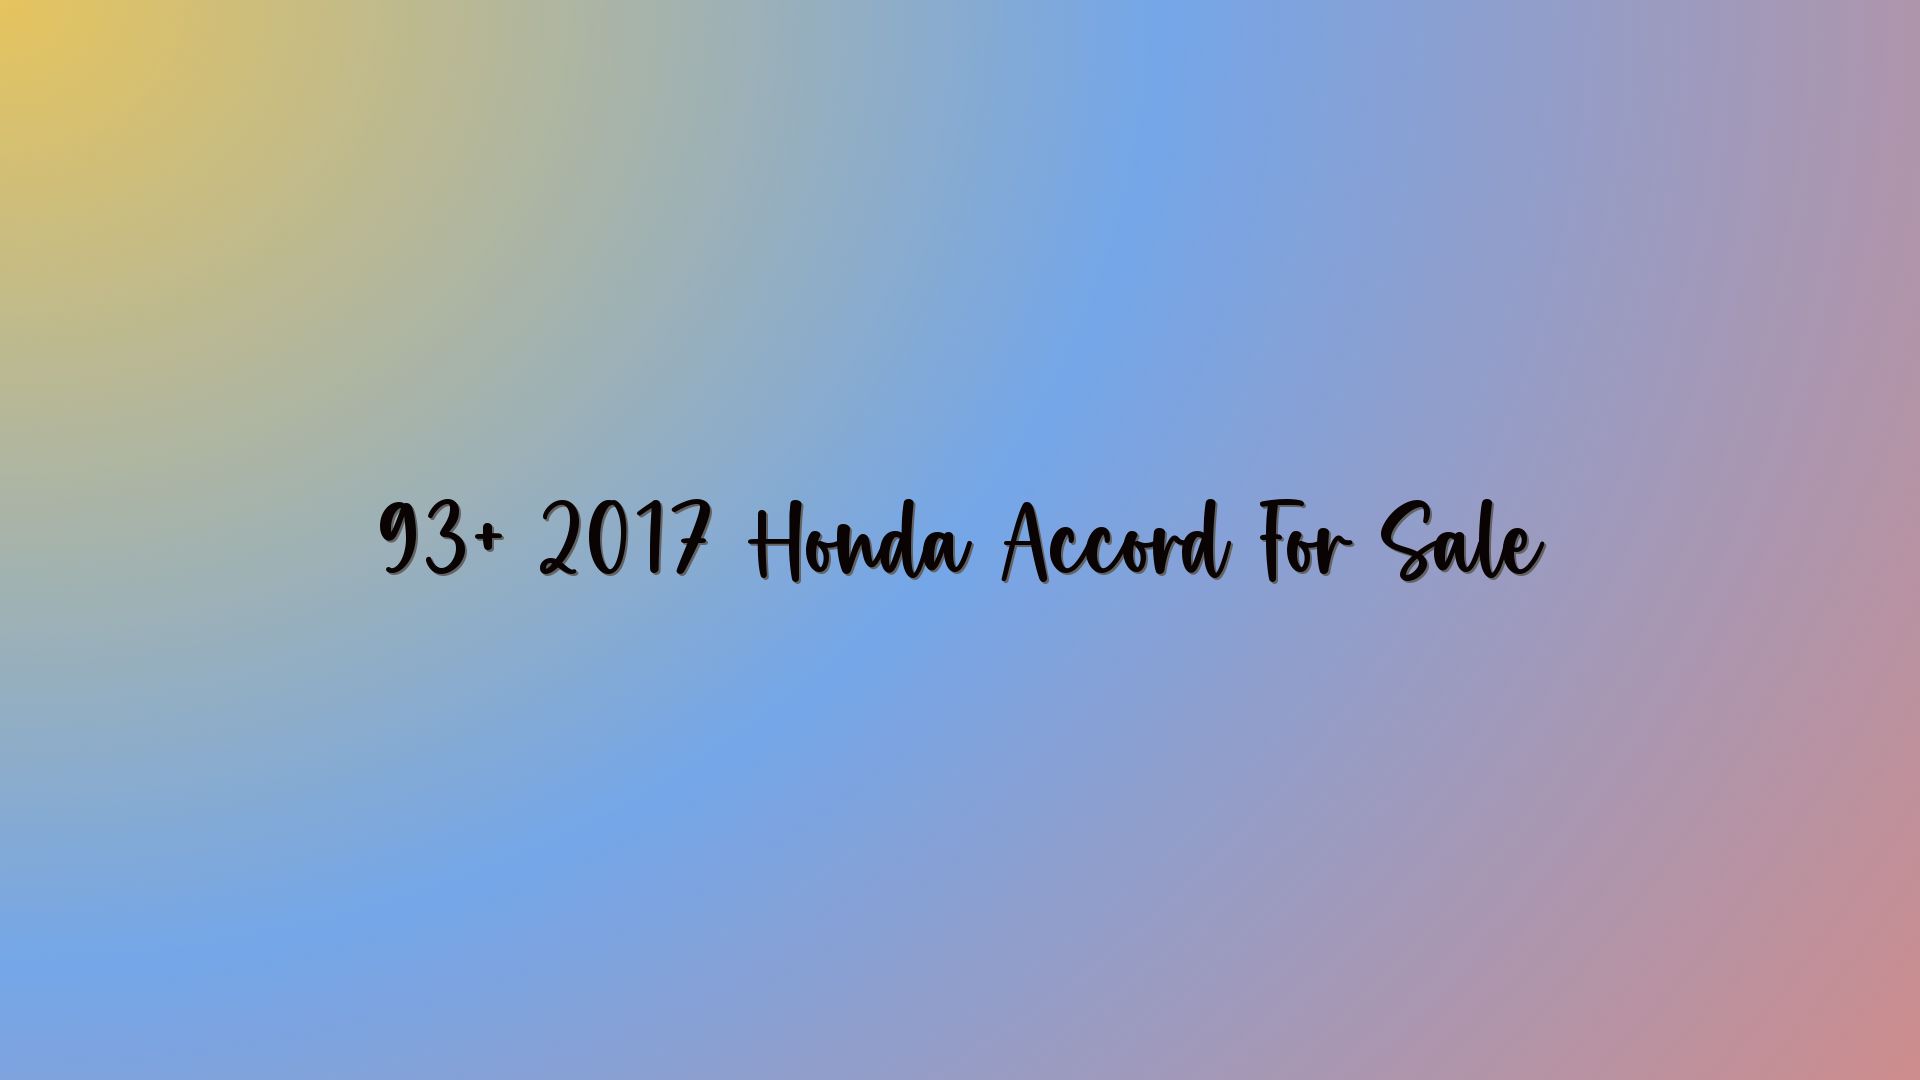 93+ 2017 Honda Accord For Sale